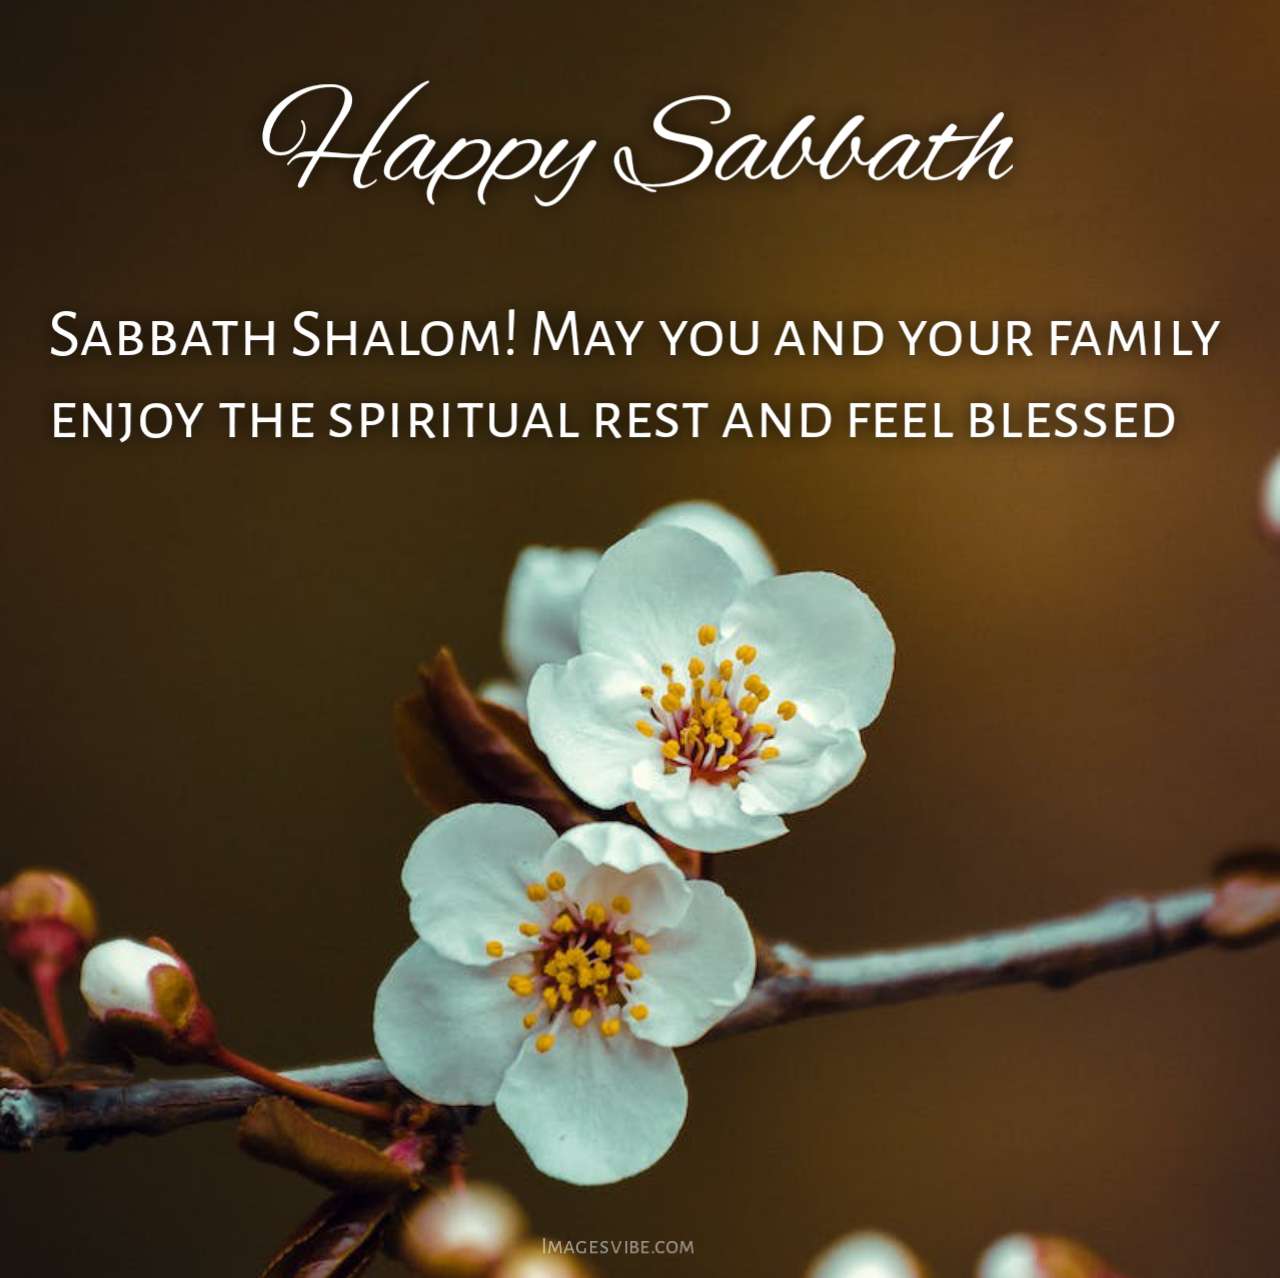 Happy Sabbath Images